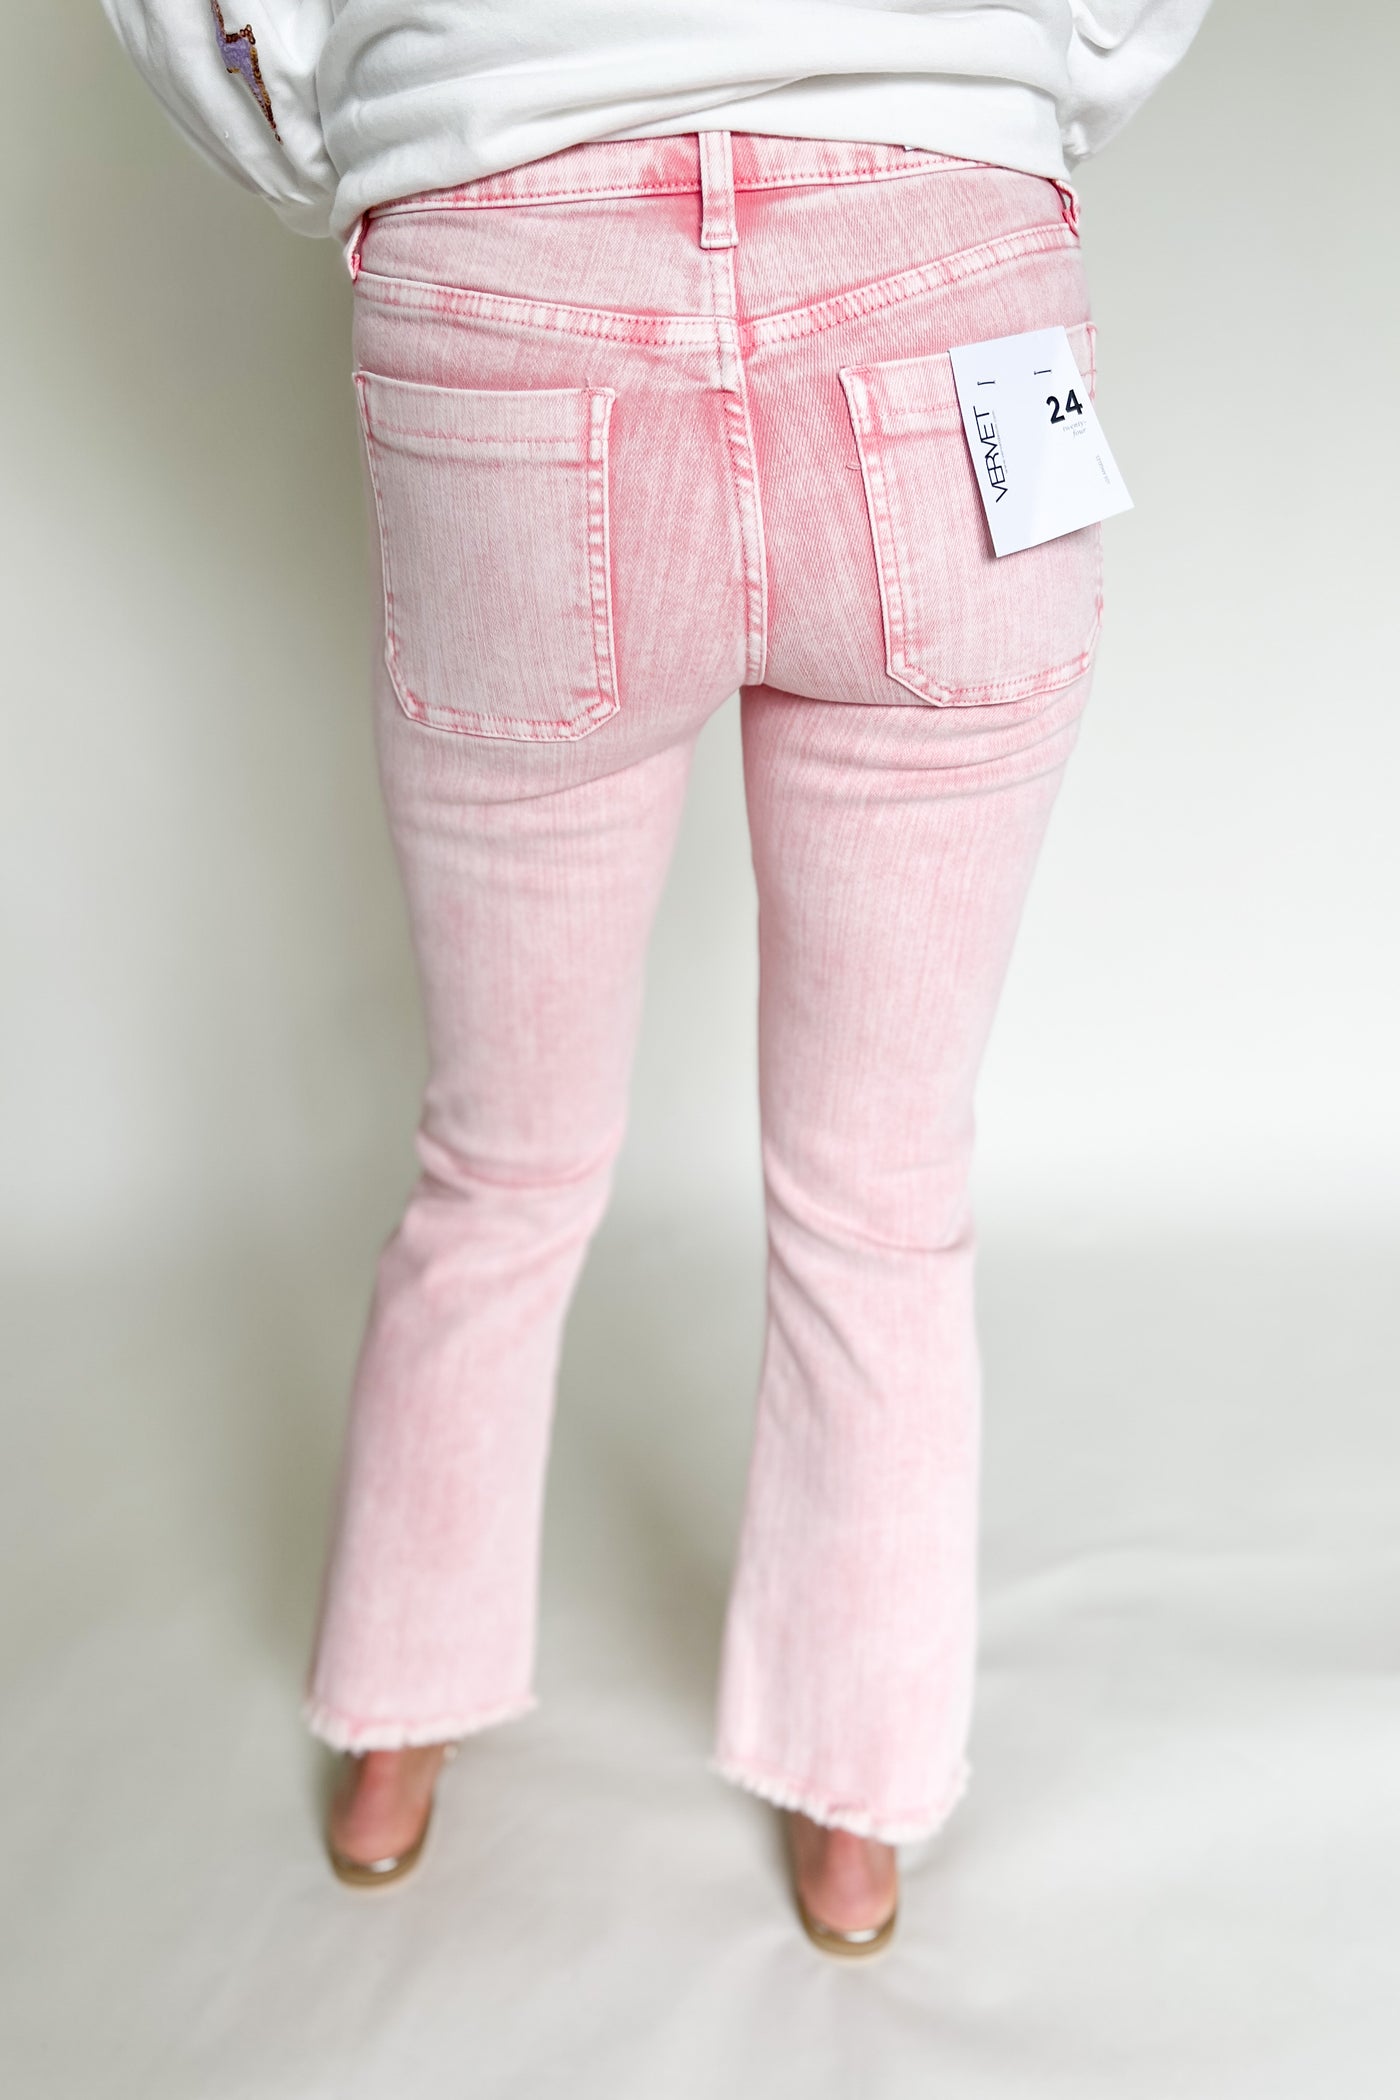 Bella jeans, pink